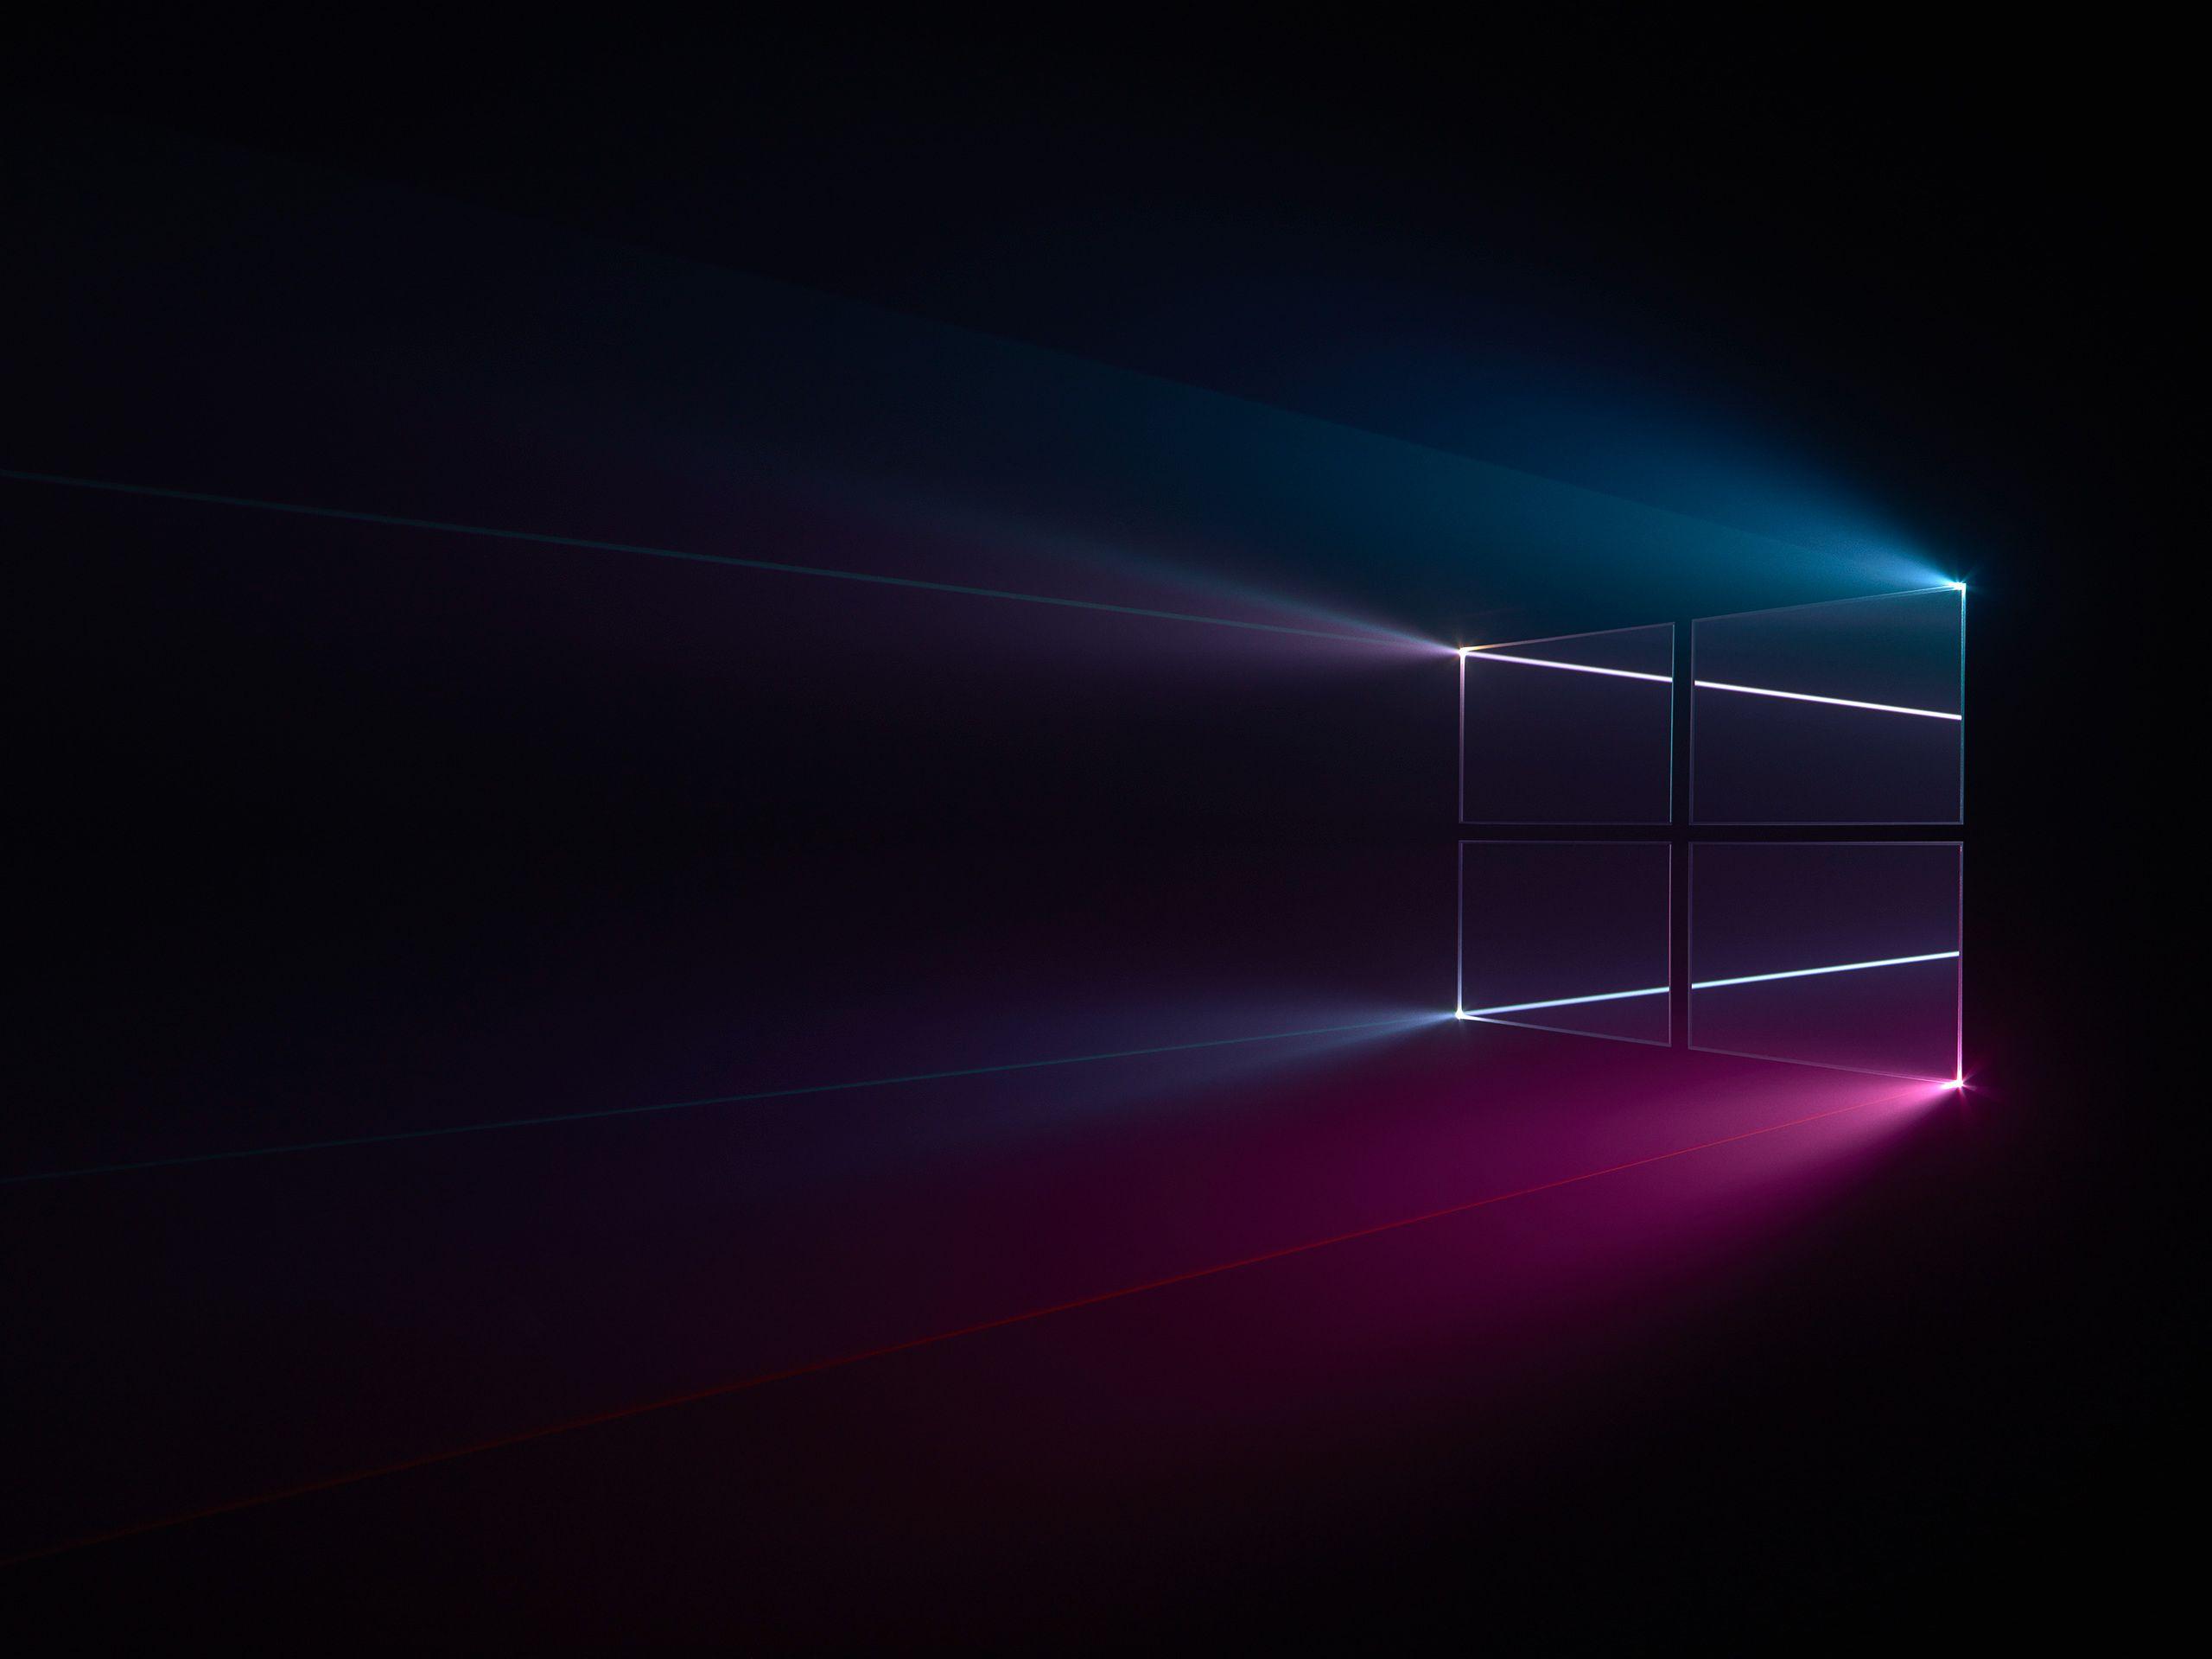 Dark Windows Logo - Wallpaper Windows Windows logo, Blue, Pink, Dark, HD, Technology